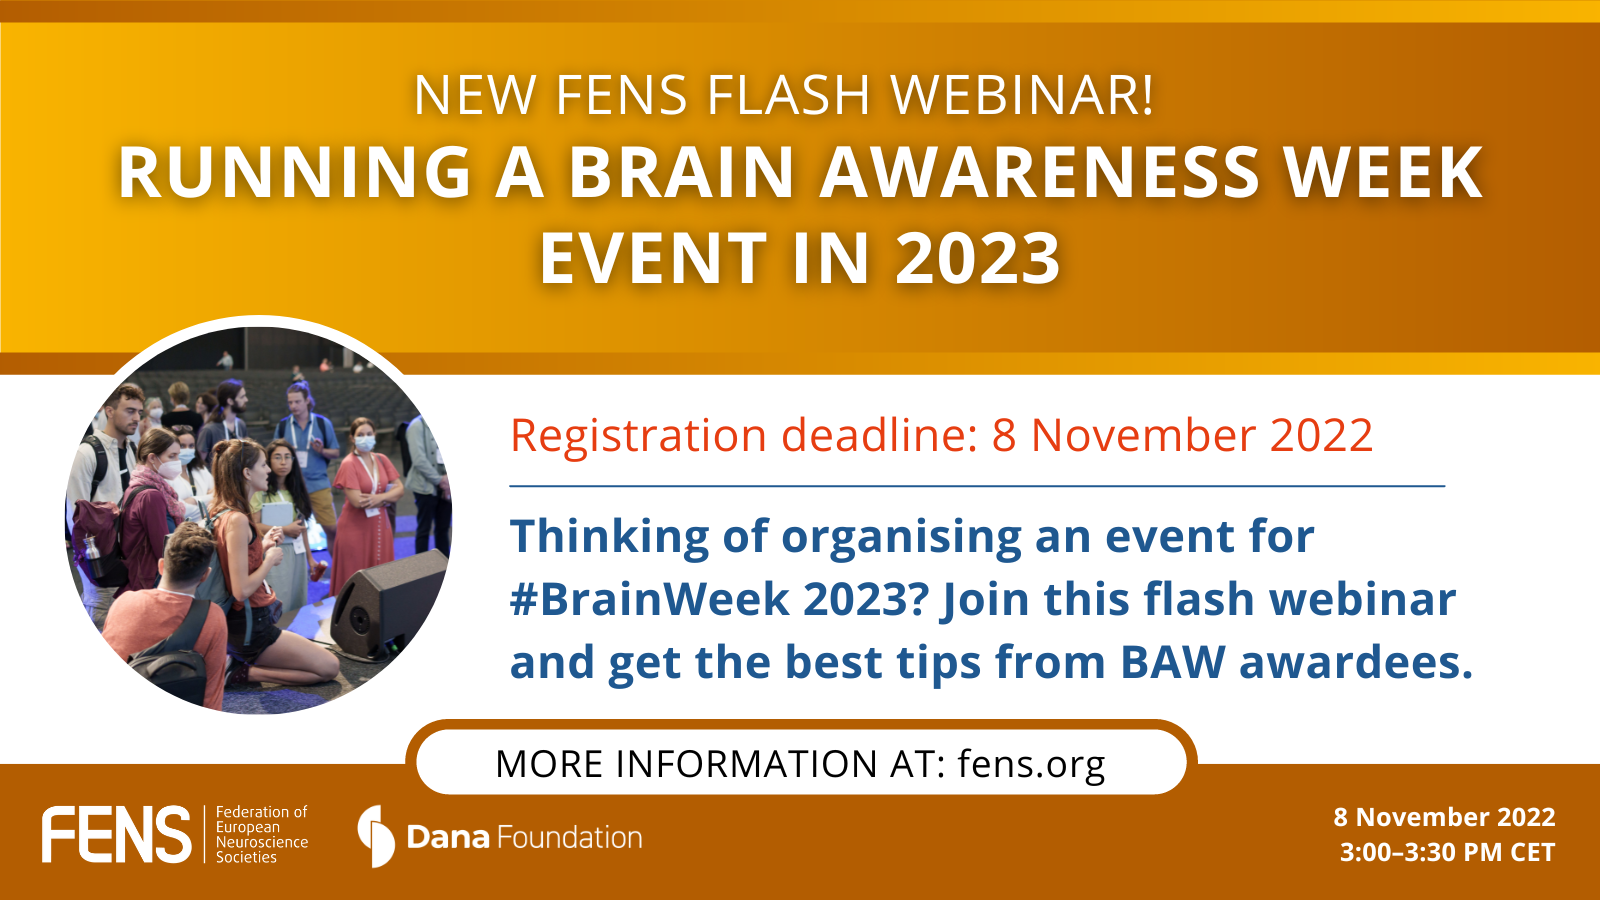 Running a Brain Awareness Week event in 2023 Federation of European